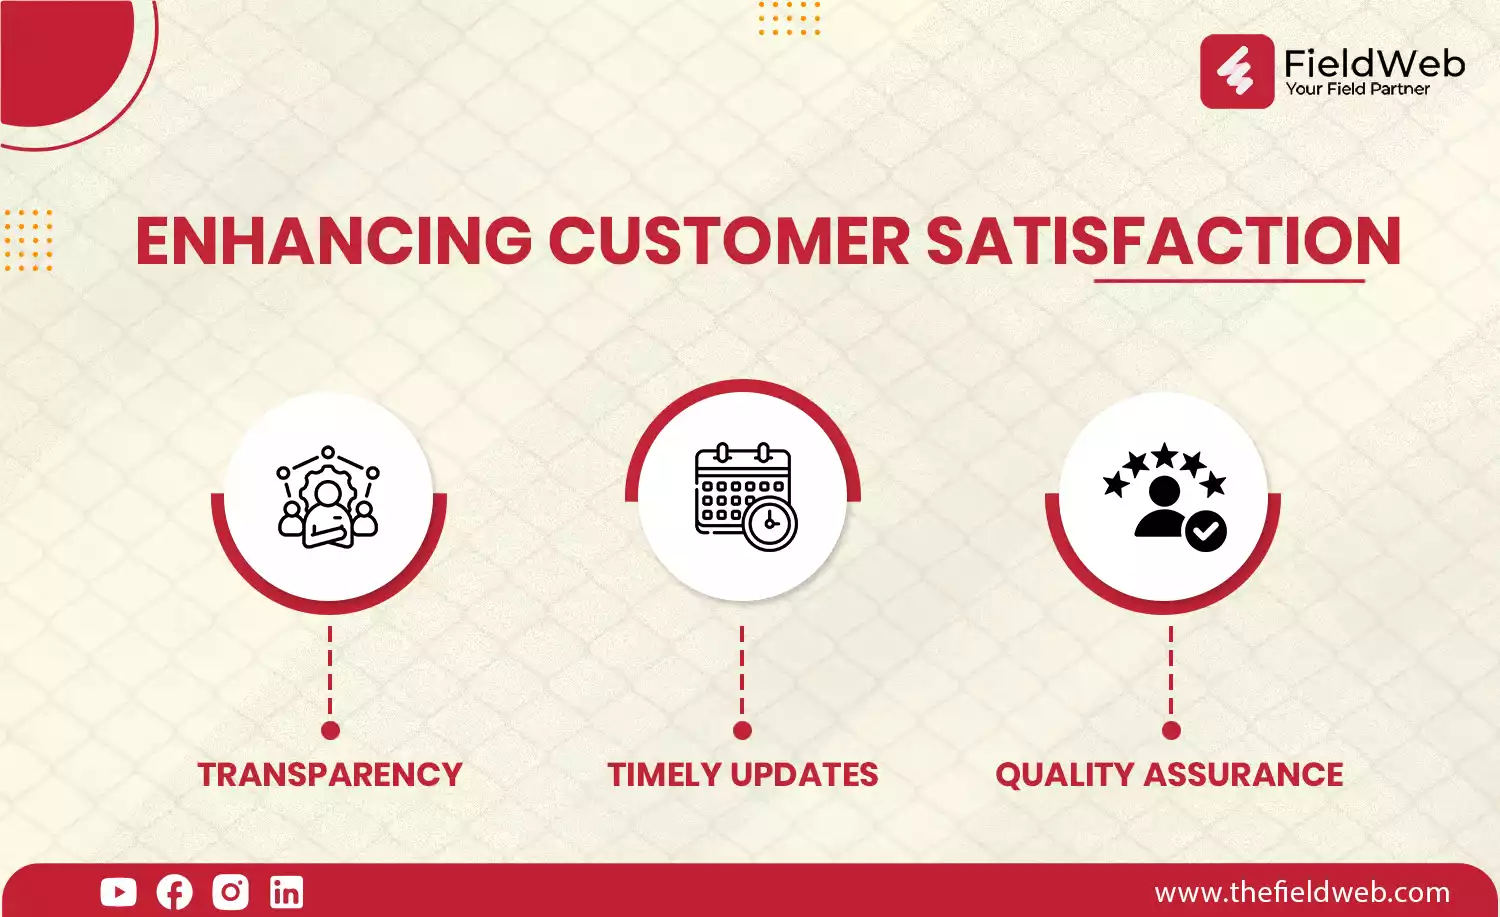 image is displaying enhancing customer satisfaction management software